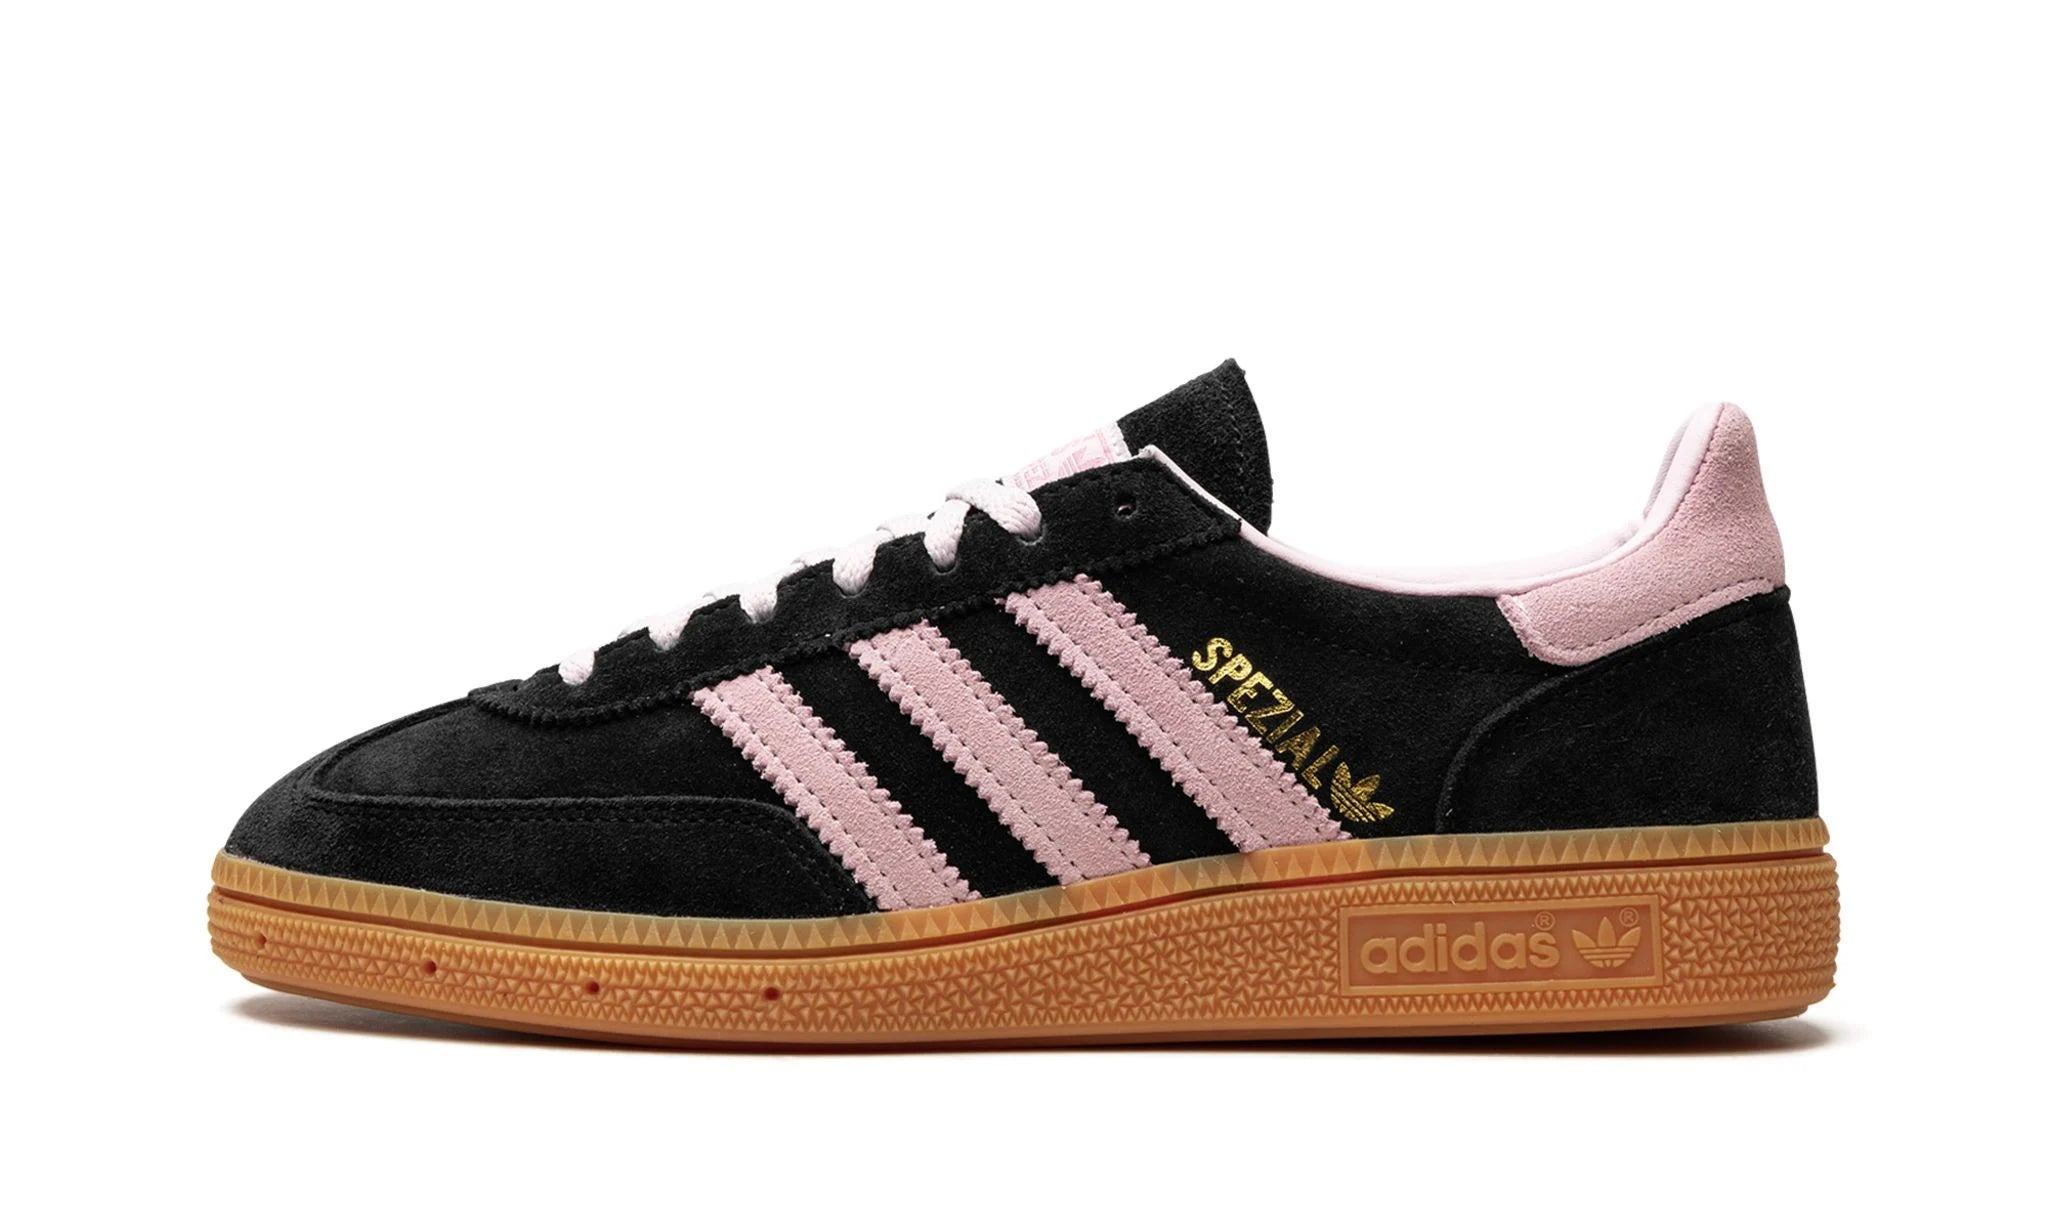 Obuv Adidas Handball Spezial Core Black Clear Pink Gum (W) - SneakerDefinition